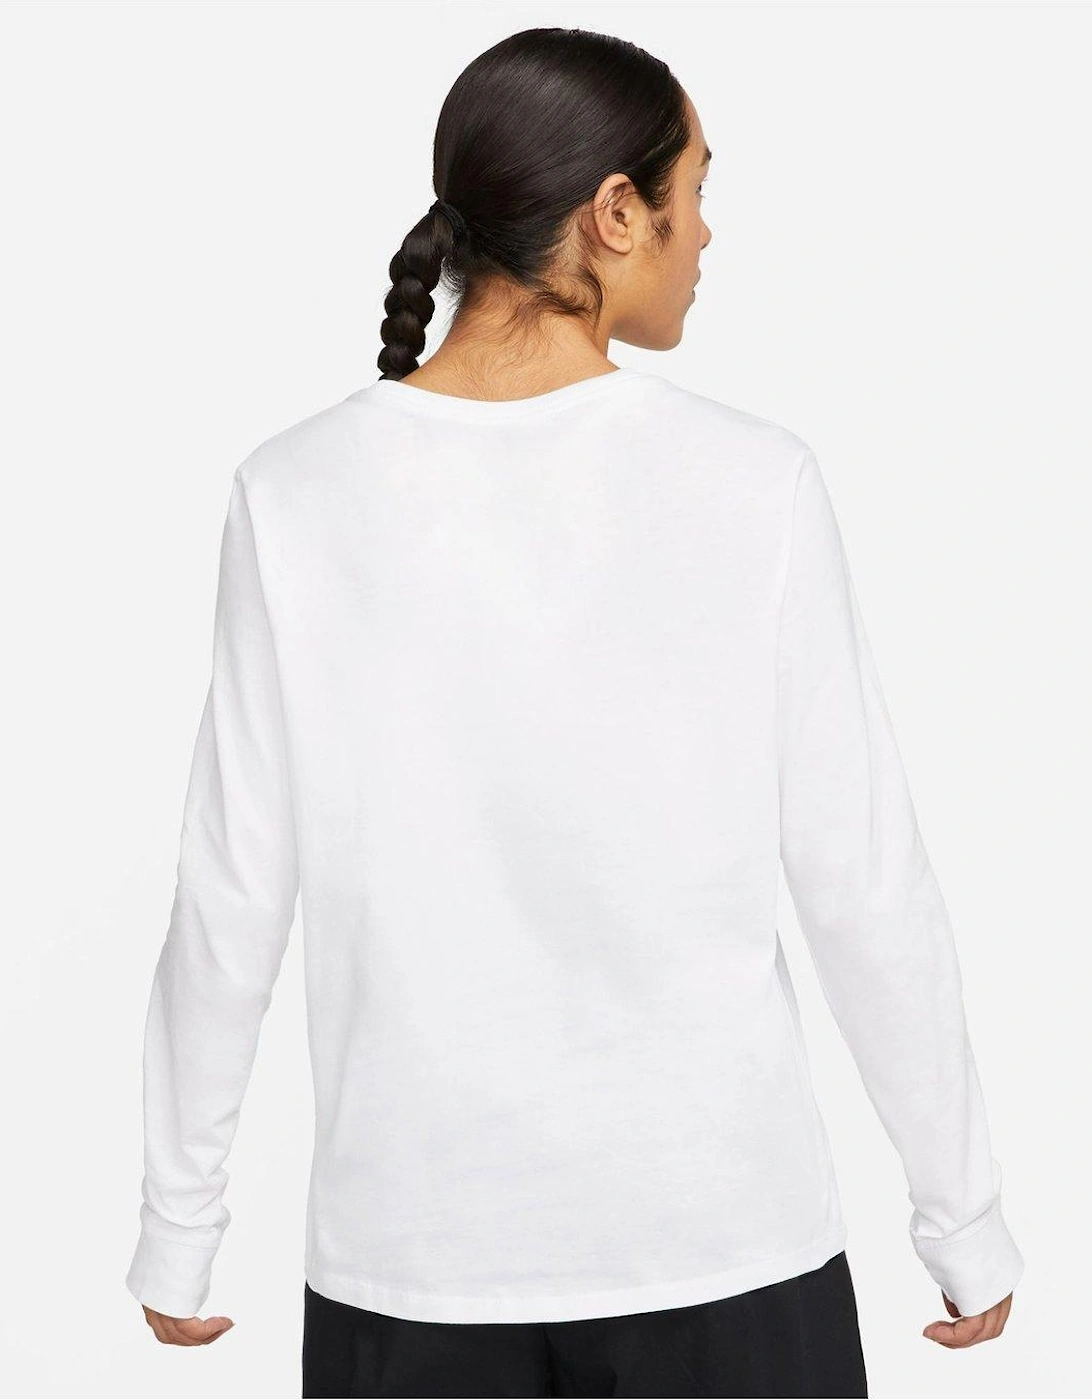 Sportswear Premium Essentials Long-Sleeve T-Shirt - White